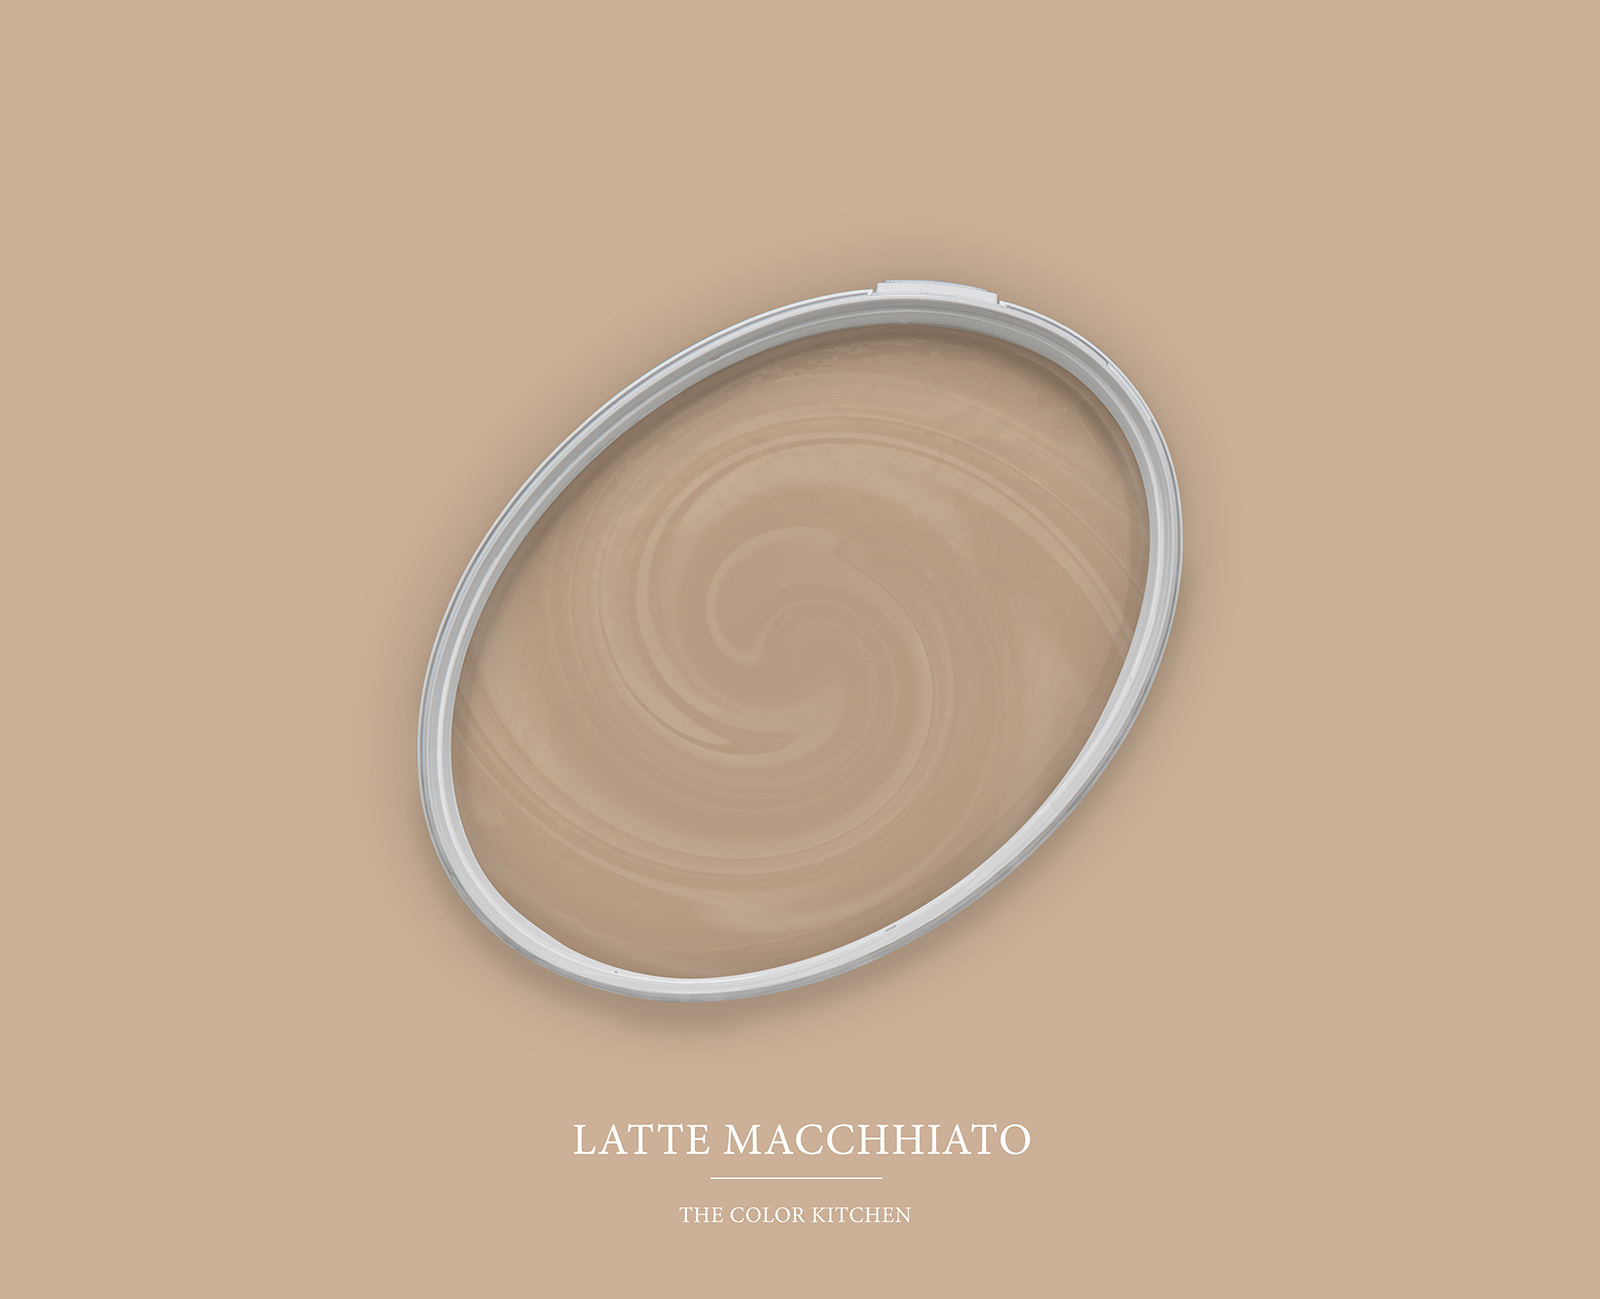 Wandfarbe in natürlichem Beige »Latte Macchhiato« TCK6010 – 5 Liter
